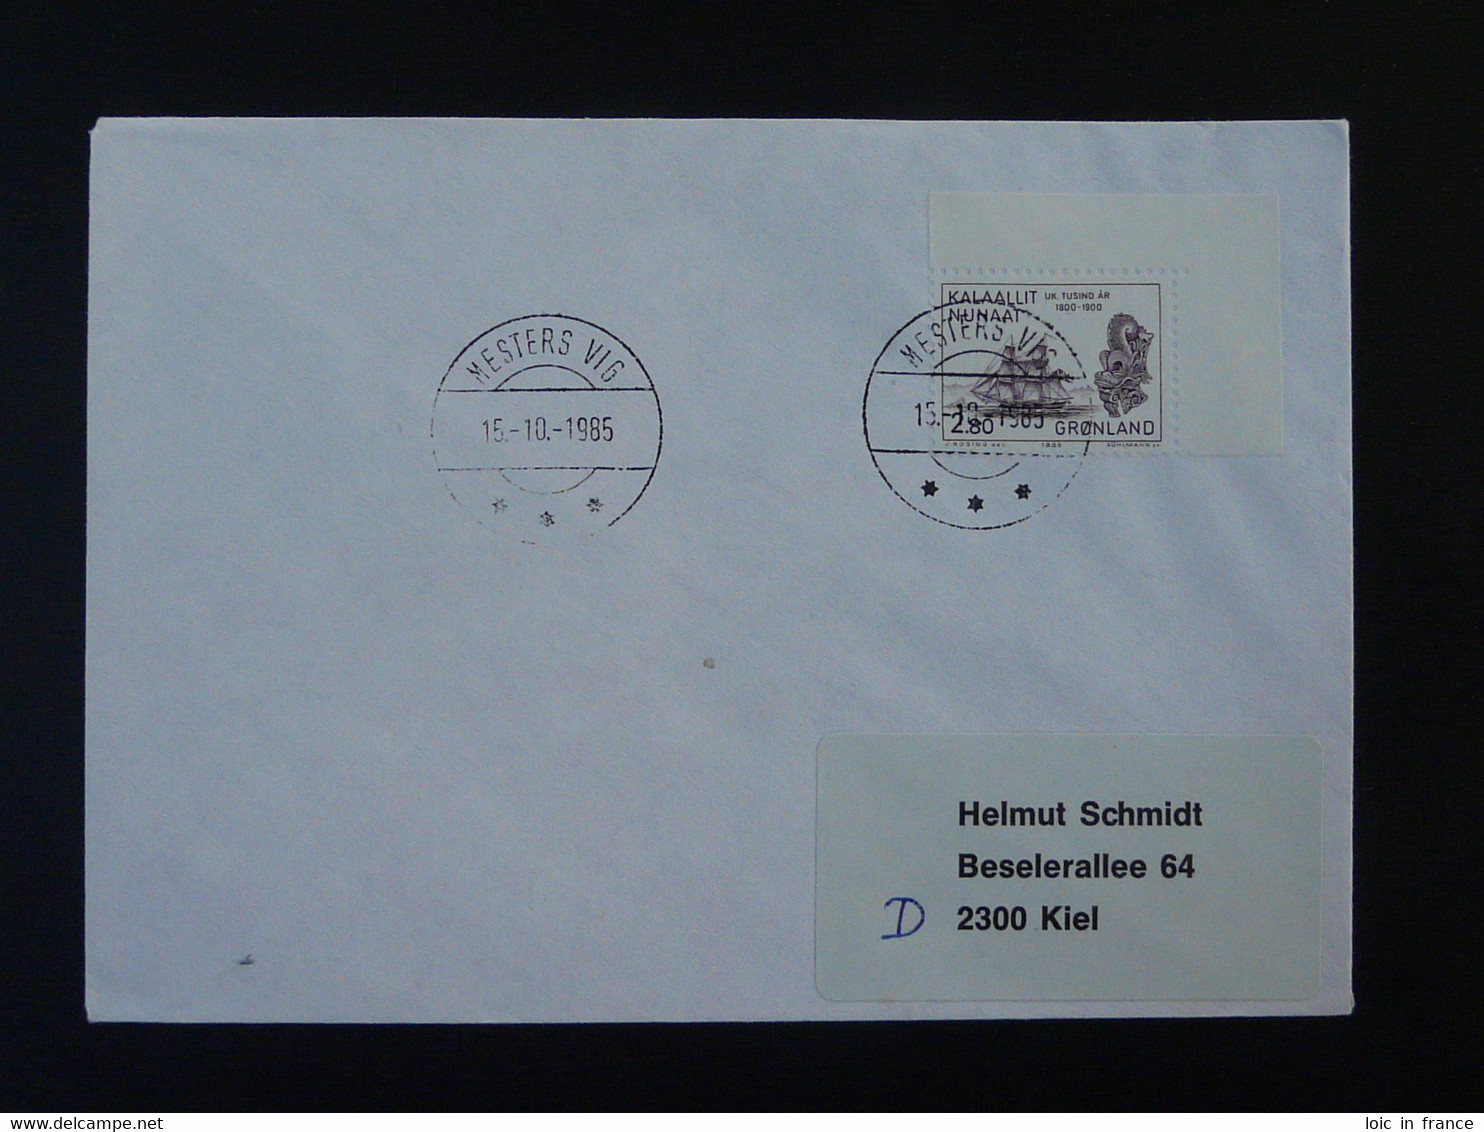 Lettre Cover Obliteration Postmark Mesters Vig Groenland Greenland 1985 (ex 2) - Postmarks